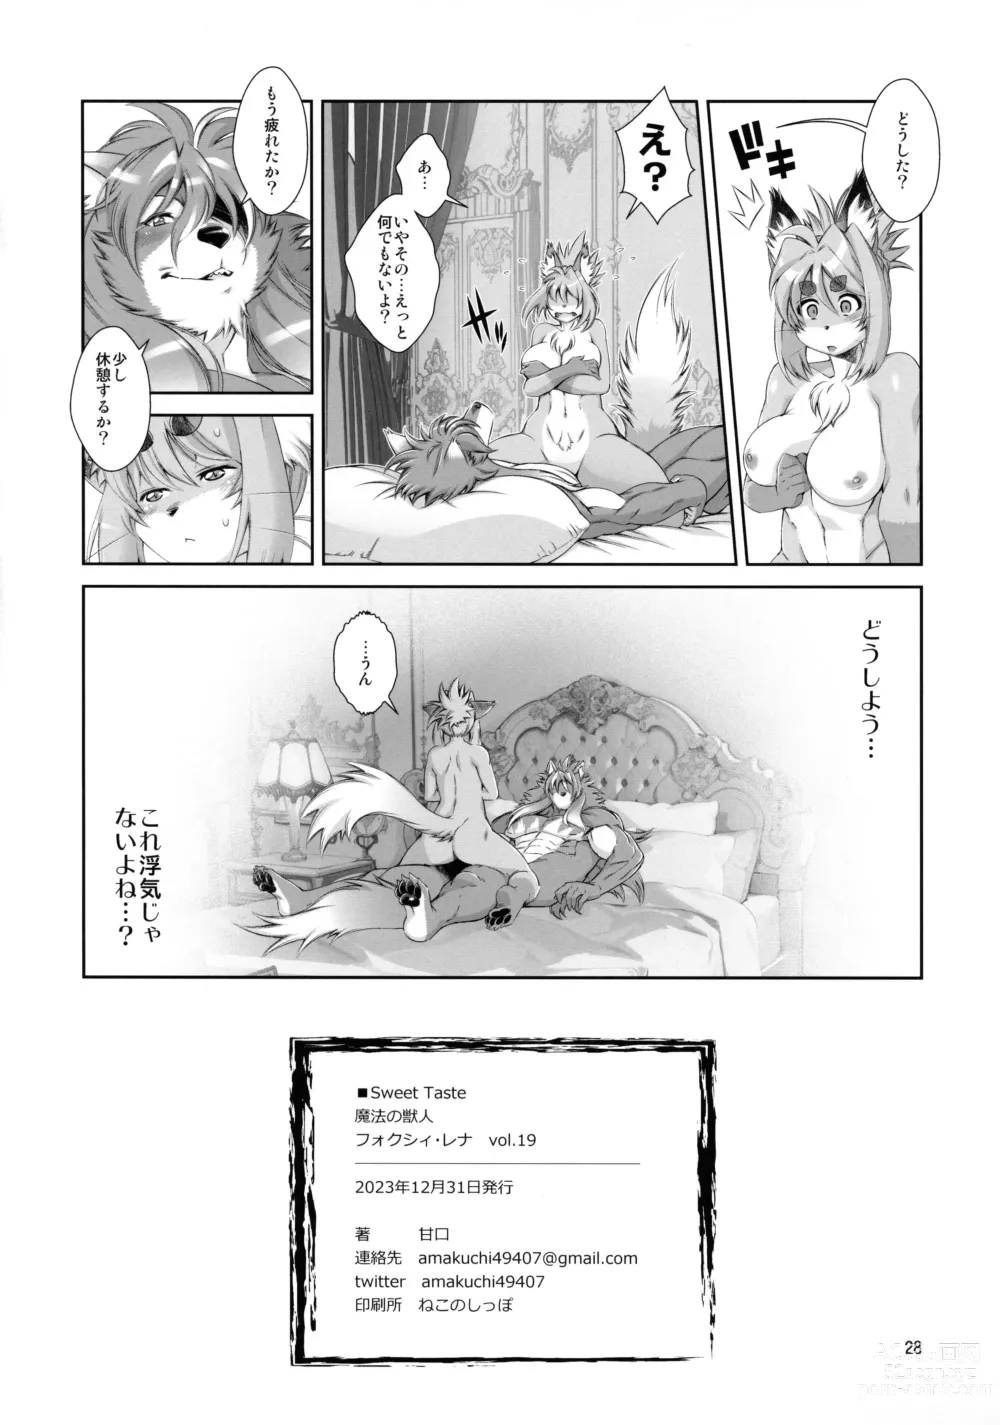 Page 29 of doujinshi Mahou no Juujin Foxy Rena 19